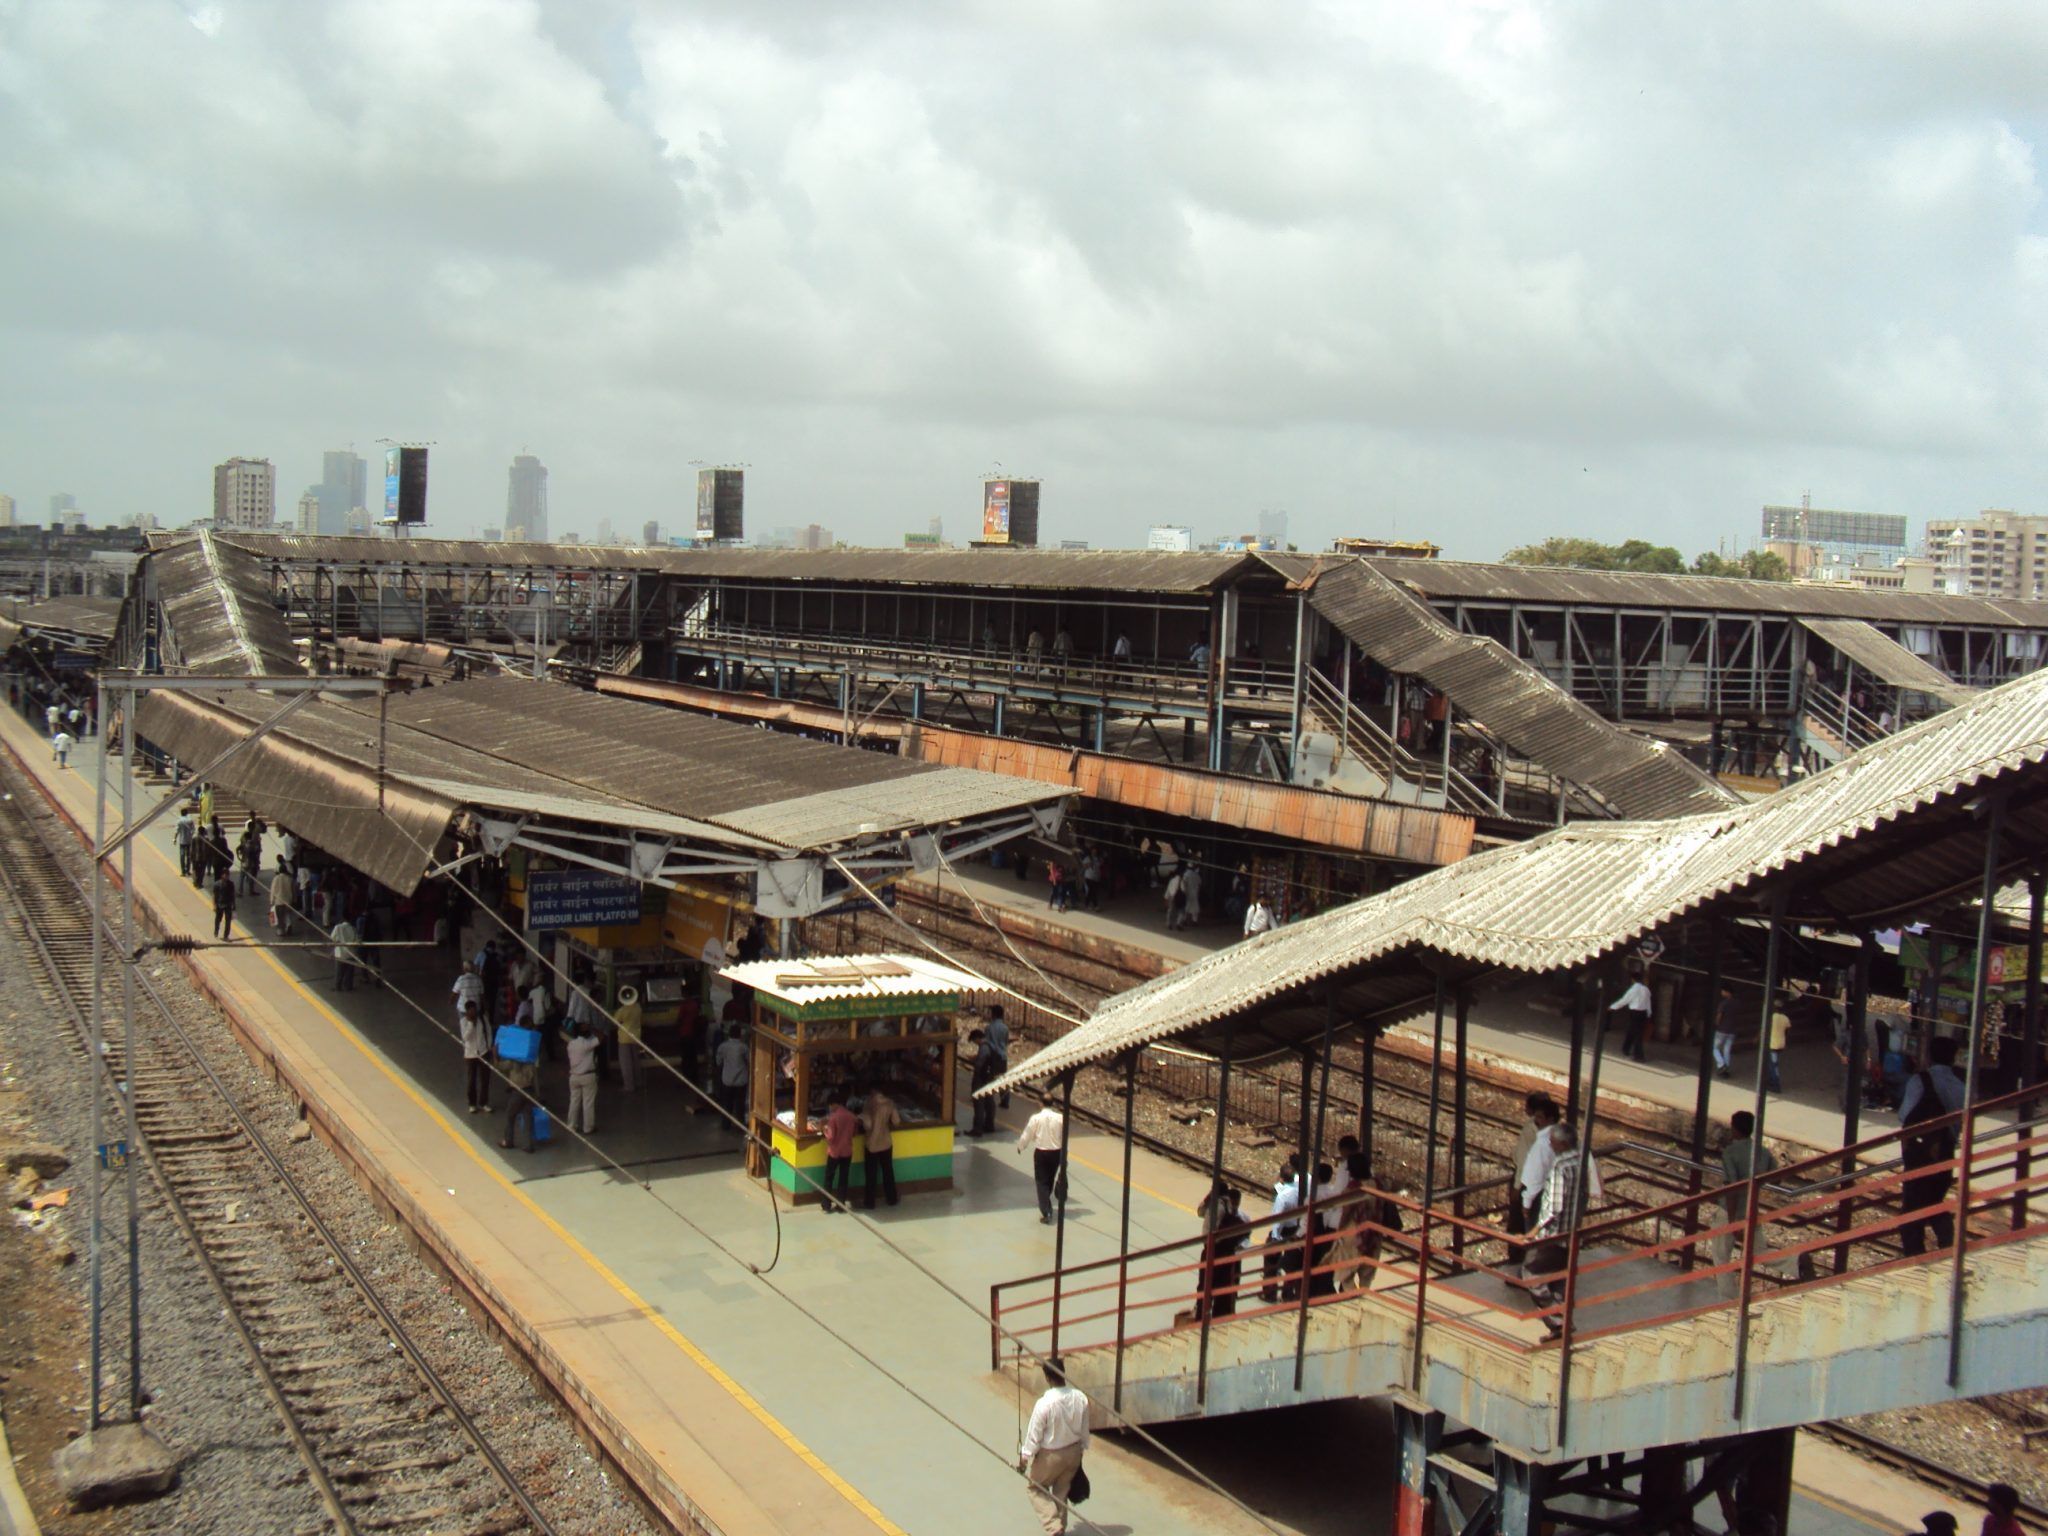 Bandra, Kandivali and Goregaon railway stations get new facilities